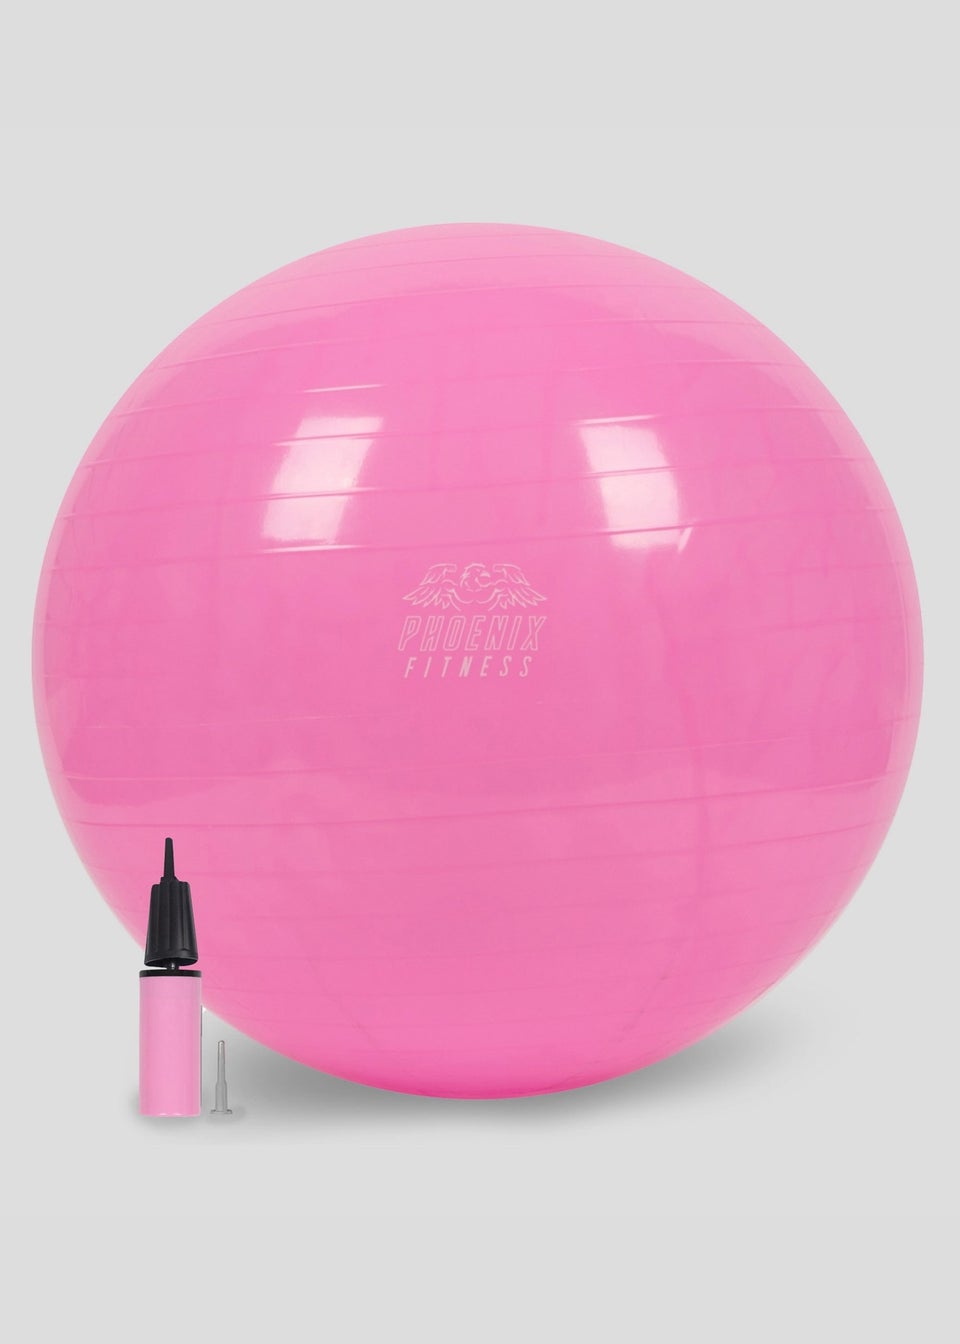 Phoenix Fitness Pink Fit Ball with Pump - Matalan